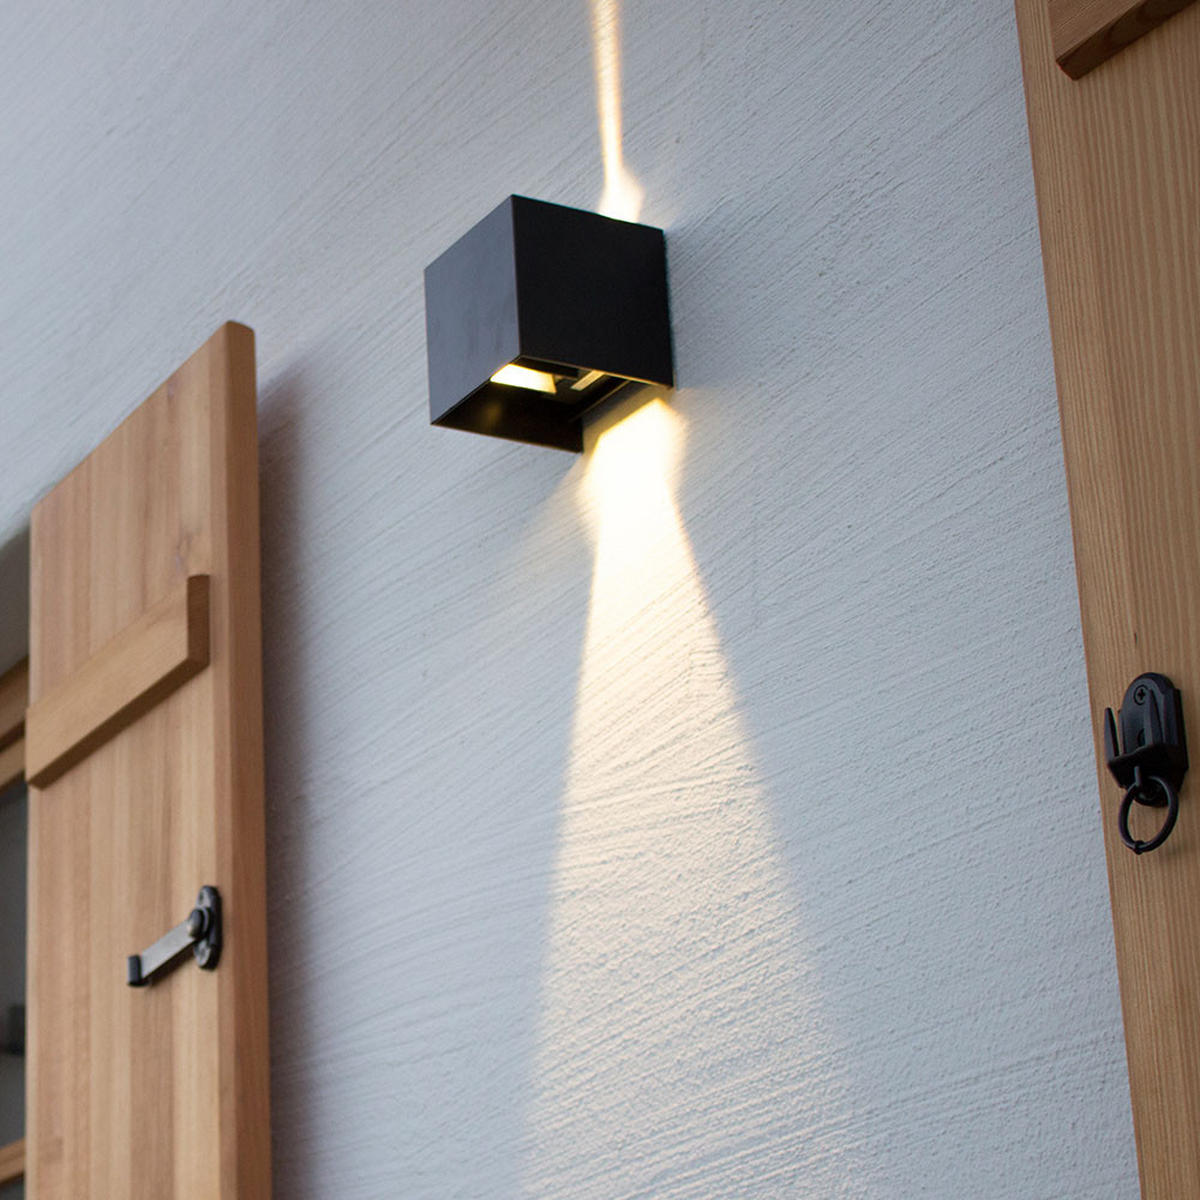 s.luce LED-WANDLAMPE Ixa jetzt Holz online Quadratisch nur ➤